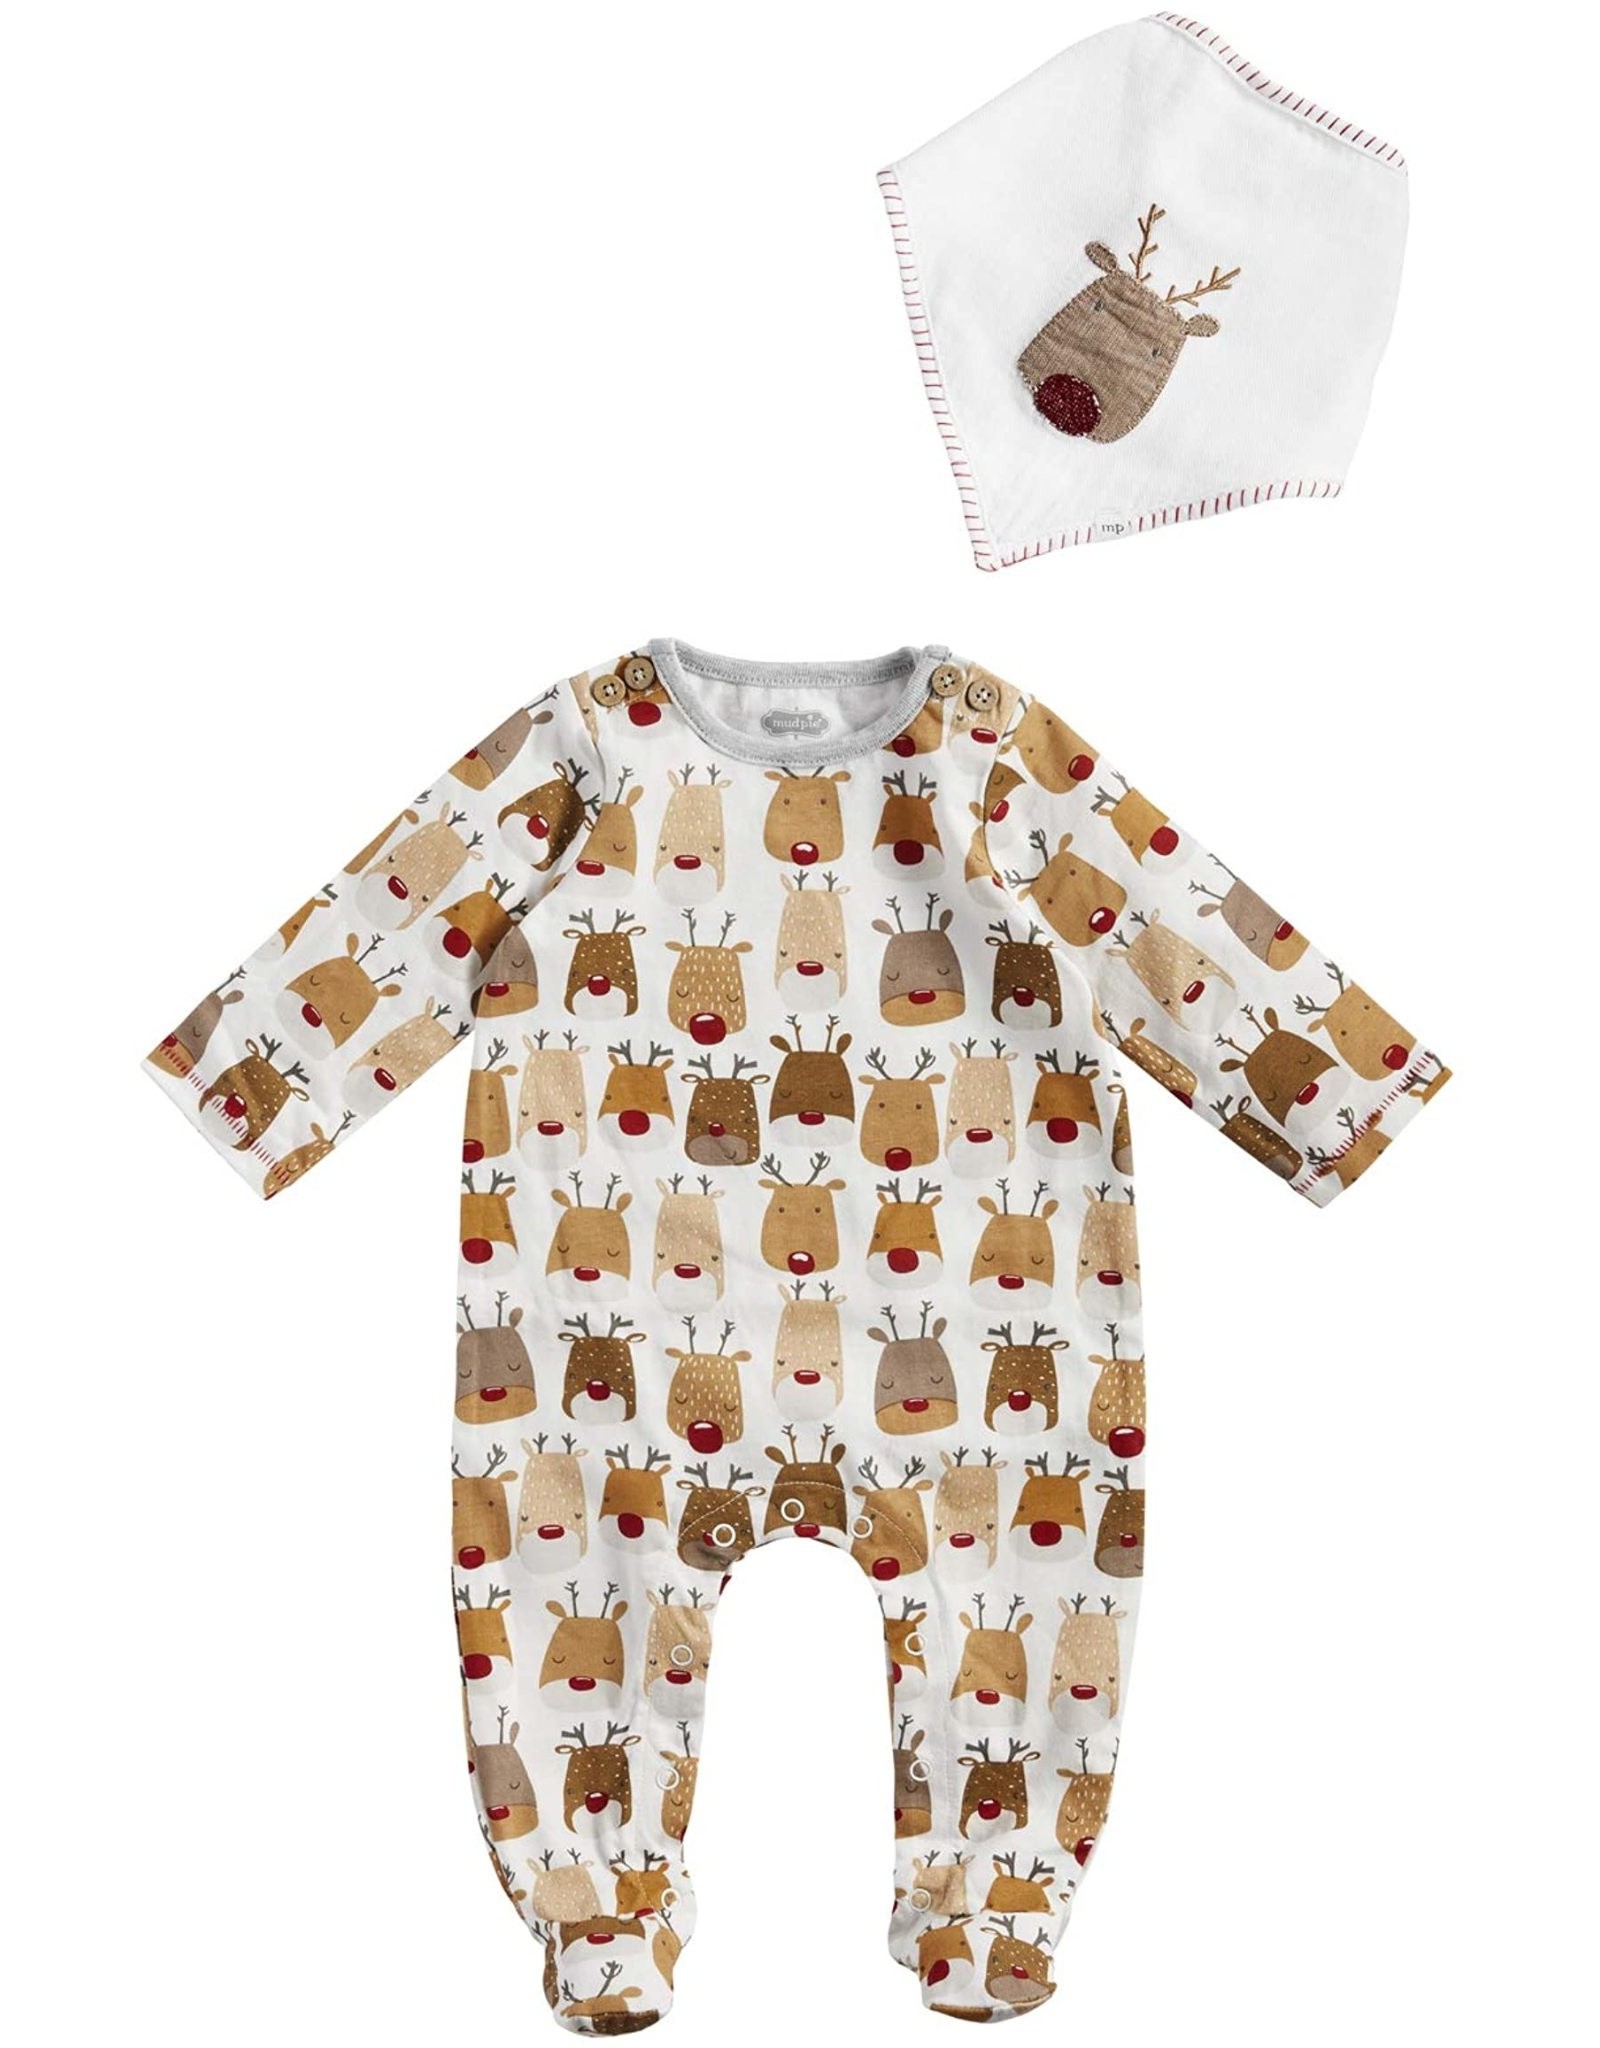 Mud Pie Kids Gifts Reindeer Sleeper And Bib Set 0-3 Months